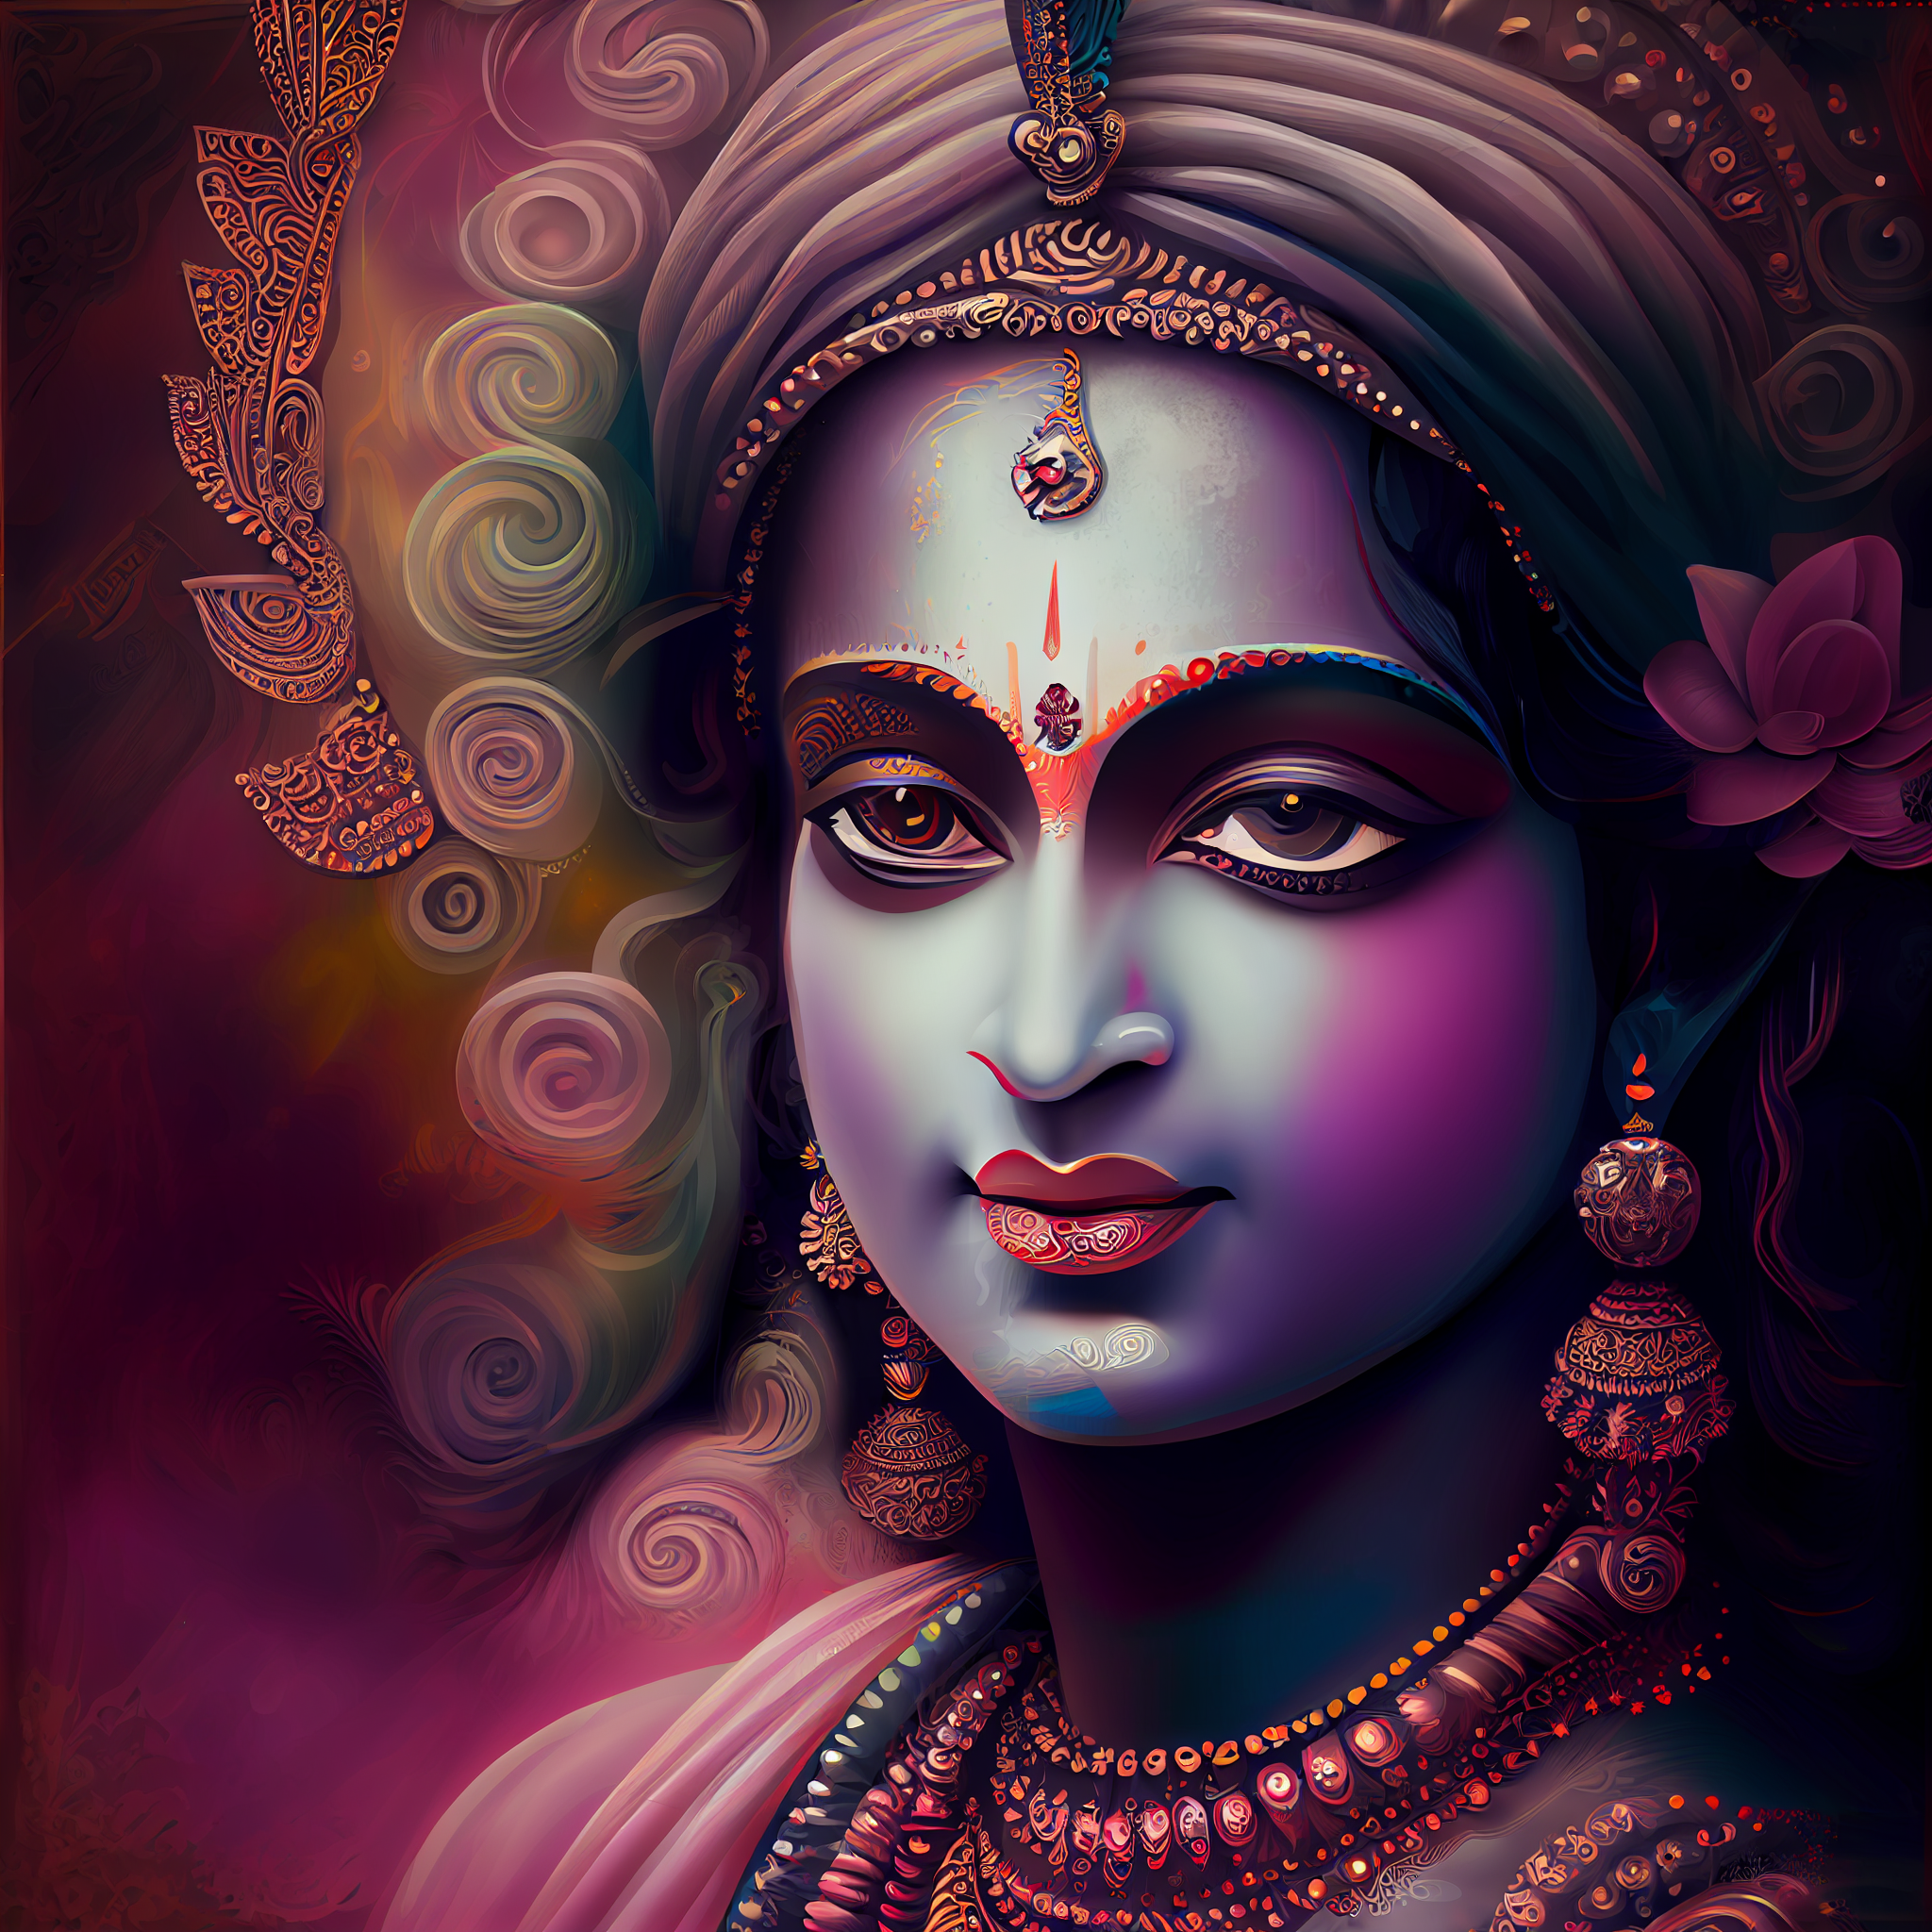 Radiant Spirit: An Airbrush Print of Hindu God Krishna's Divine Beauty